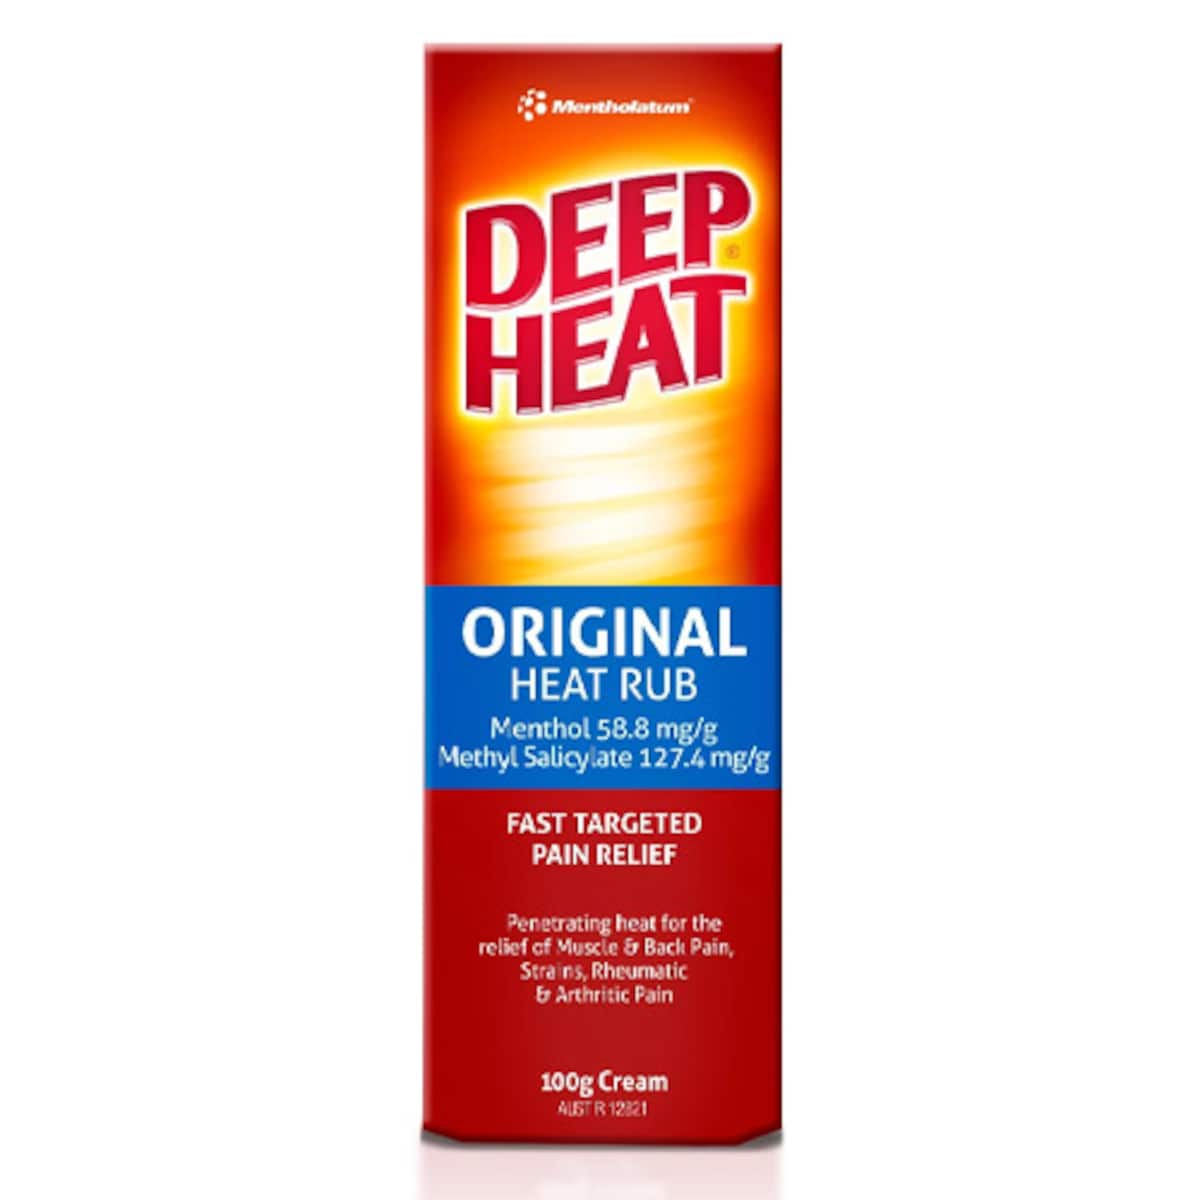 Deep Heat Original Heat Rub Pain Relief 100g